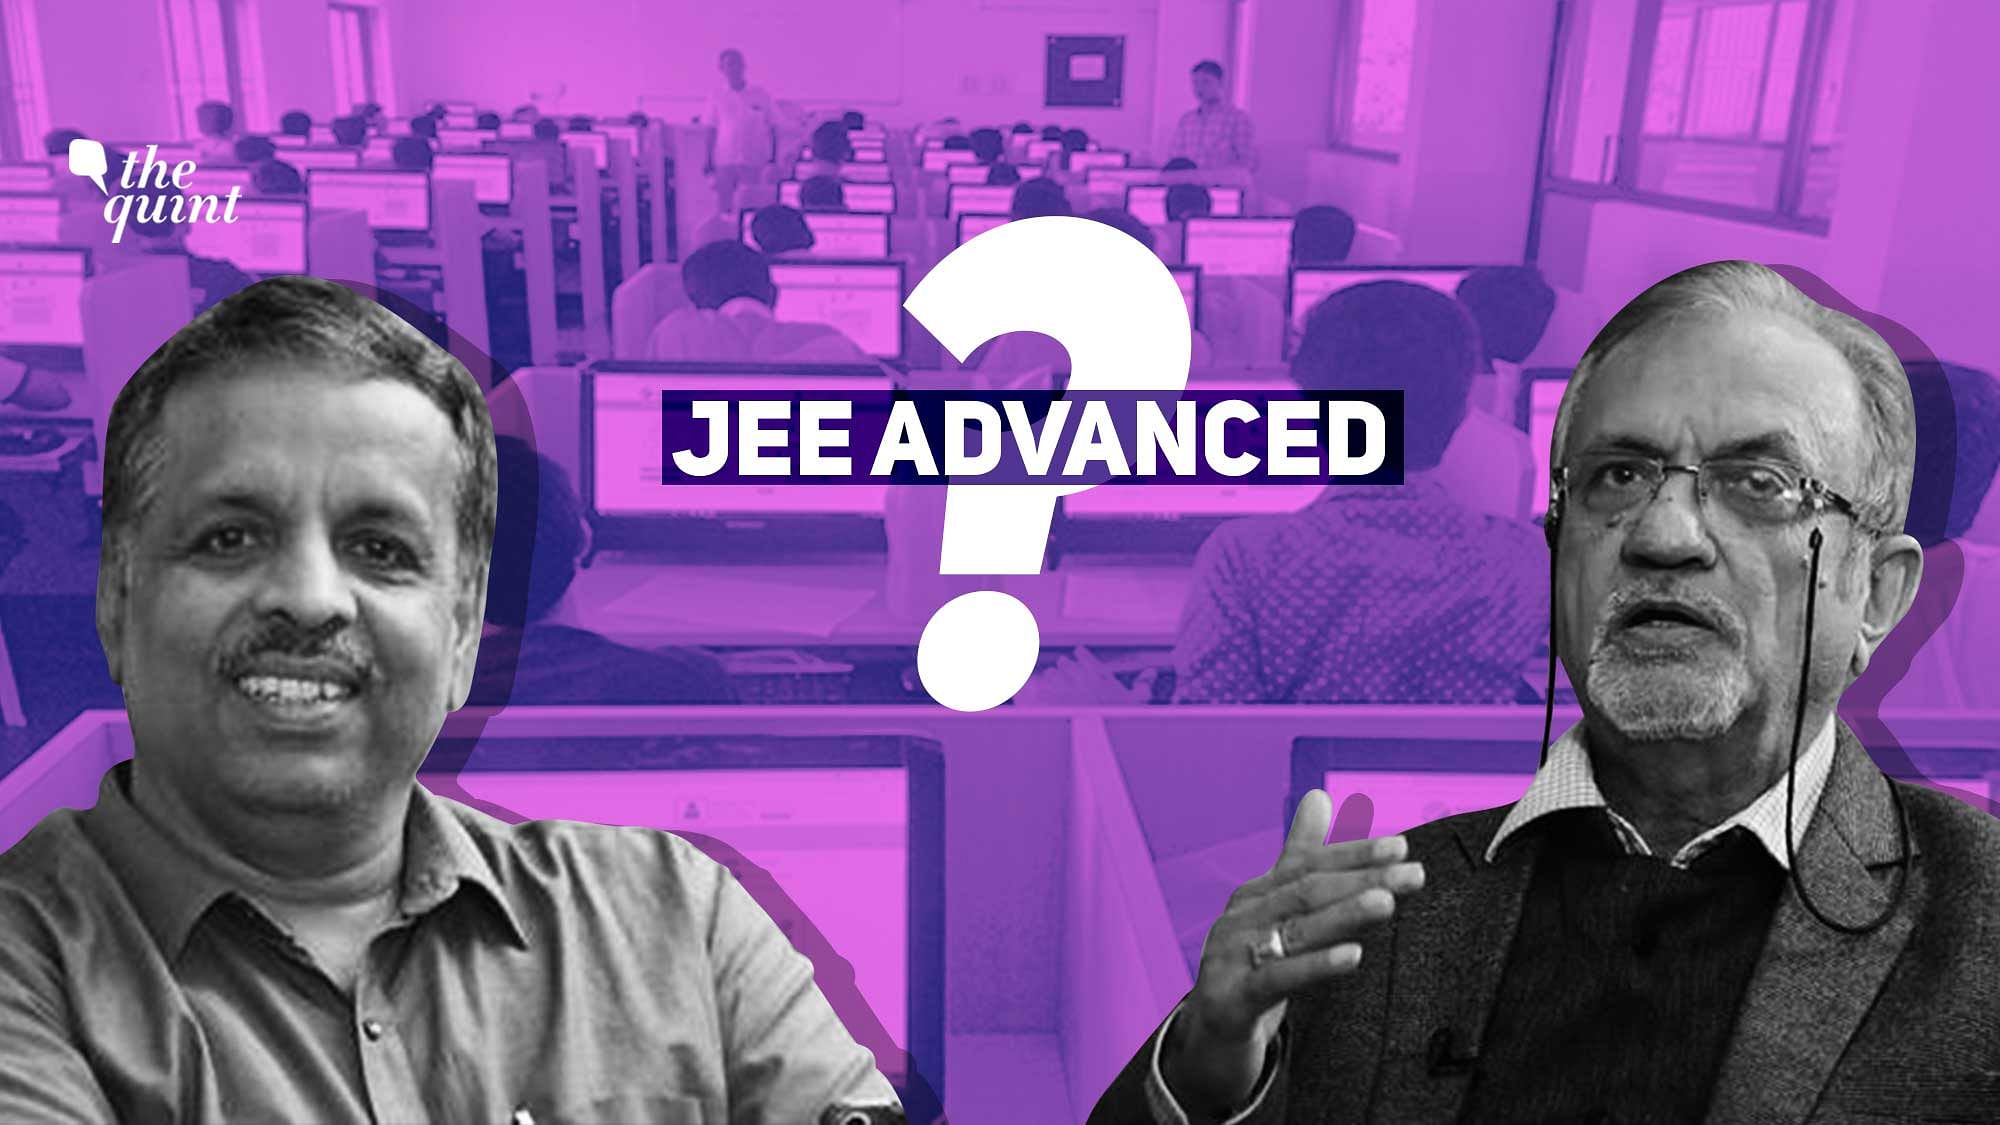 IIIT Hyderabad Director PJ Narayanan &amp; FIIT JEE Director Trikha speak on whether JEE Advanced should be cancelled.